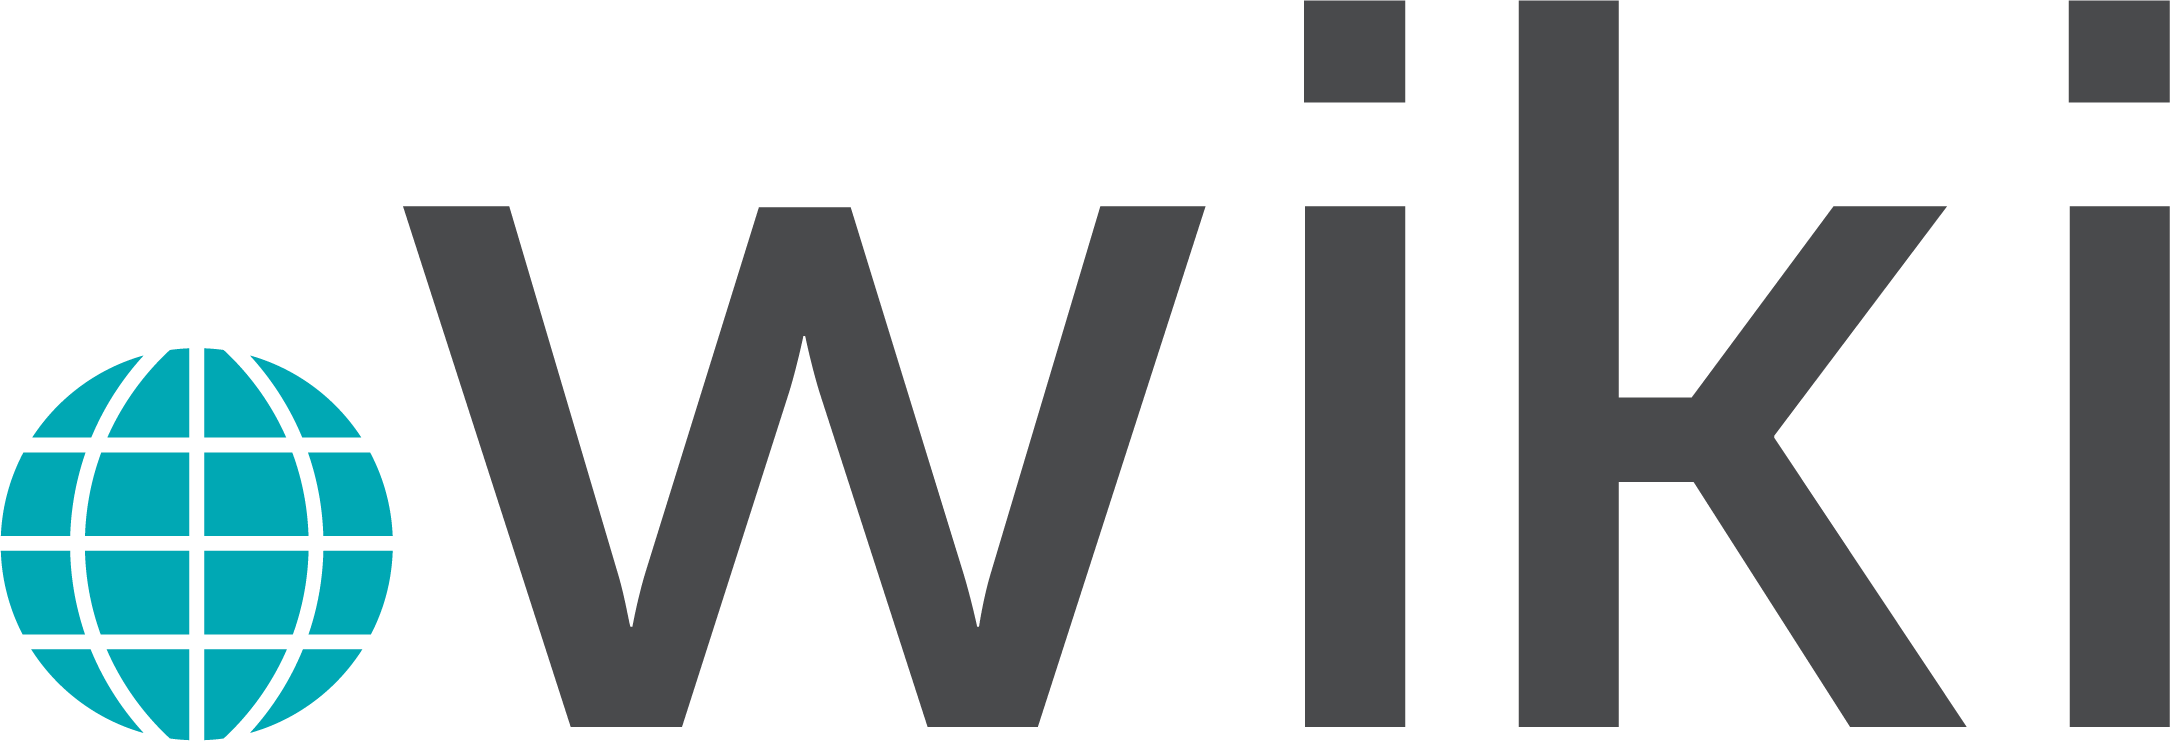 Домен tv. Вик логотип. TECE логотип. Mediawiki logo. Wiki.